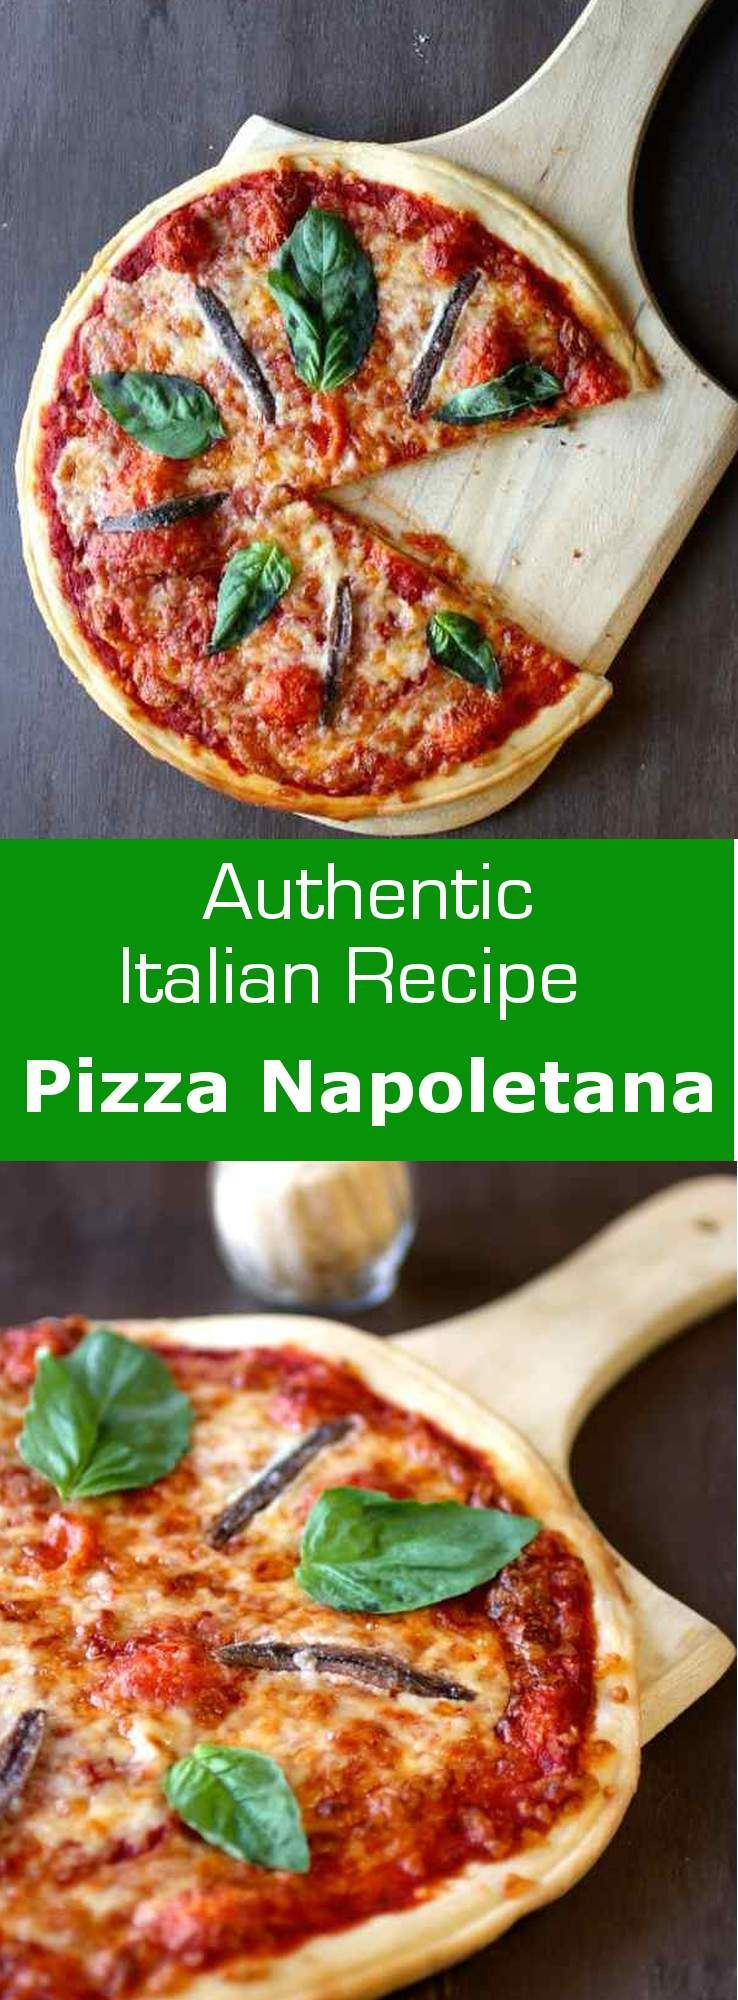 Authentic Neapolitan Pizza Dough Recipe
 Pizza napoletana or Neapolitan pizza is the original